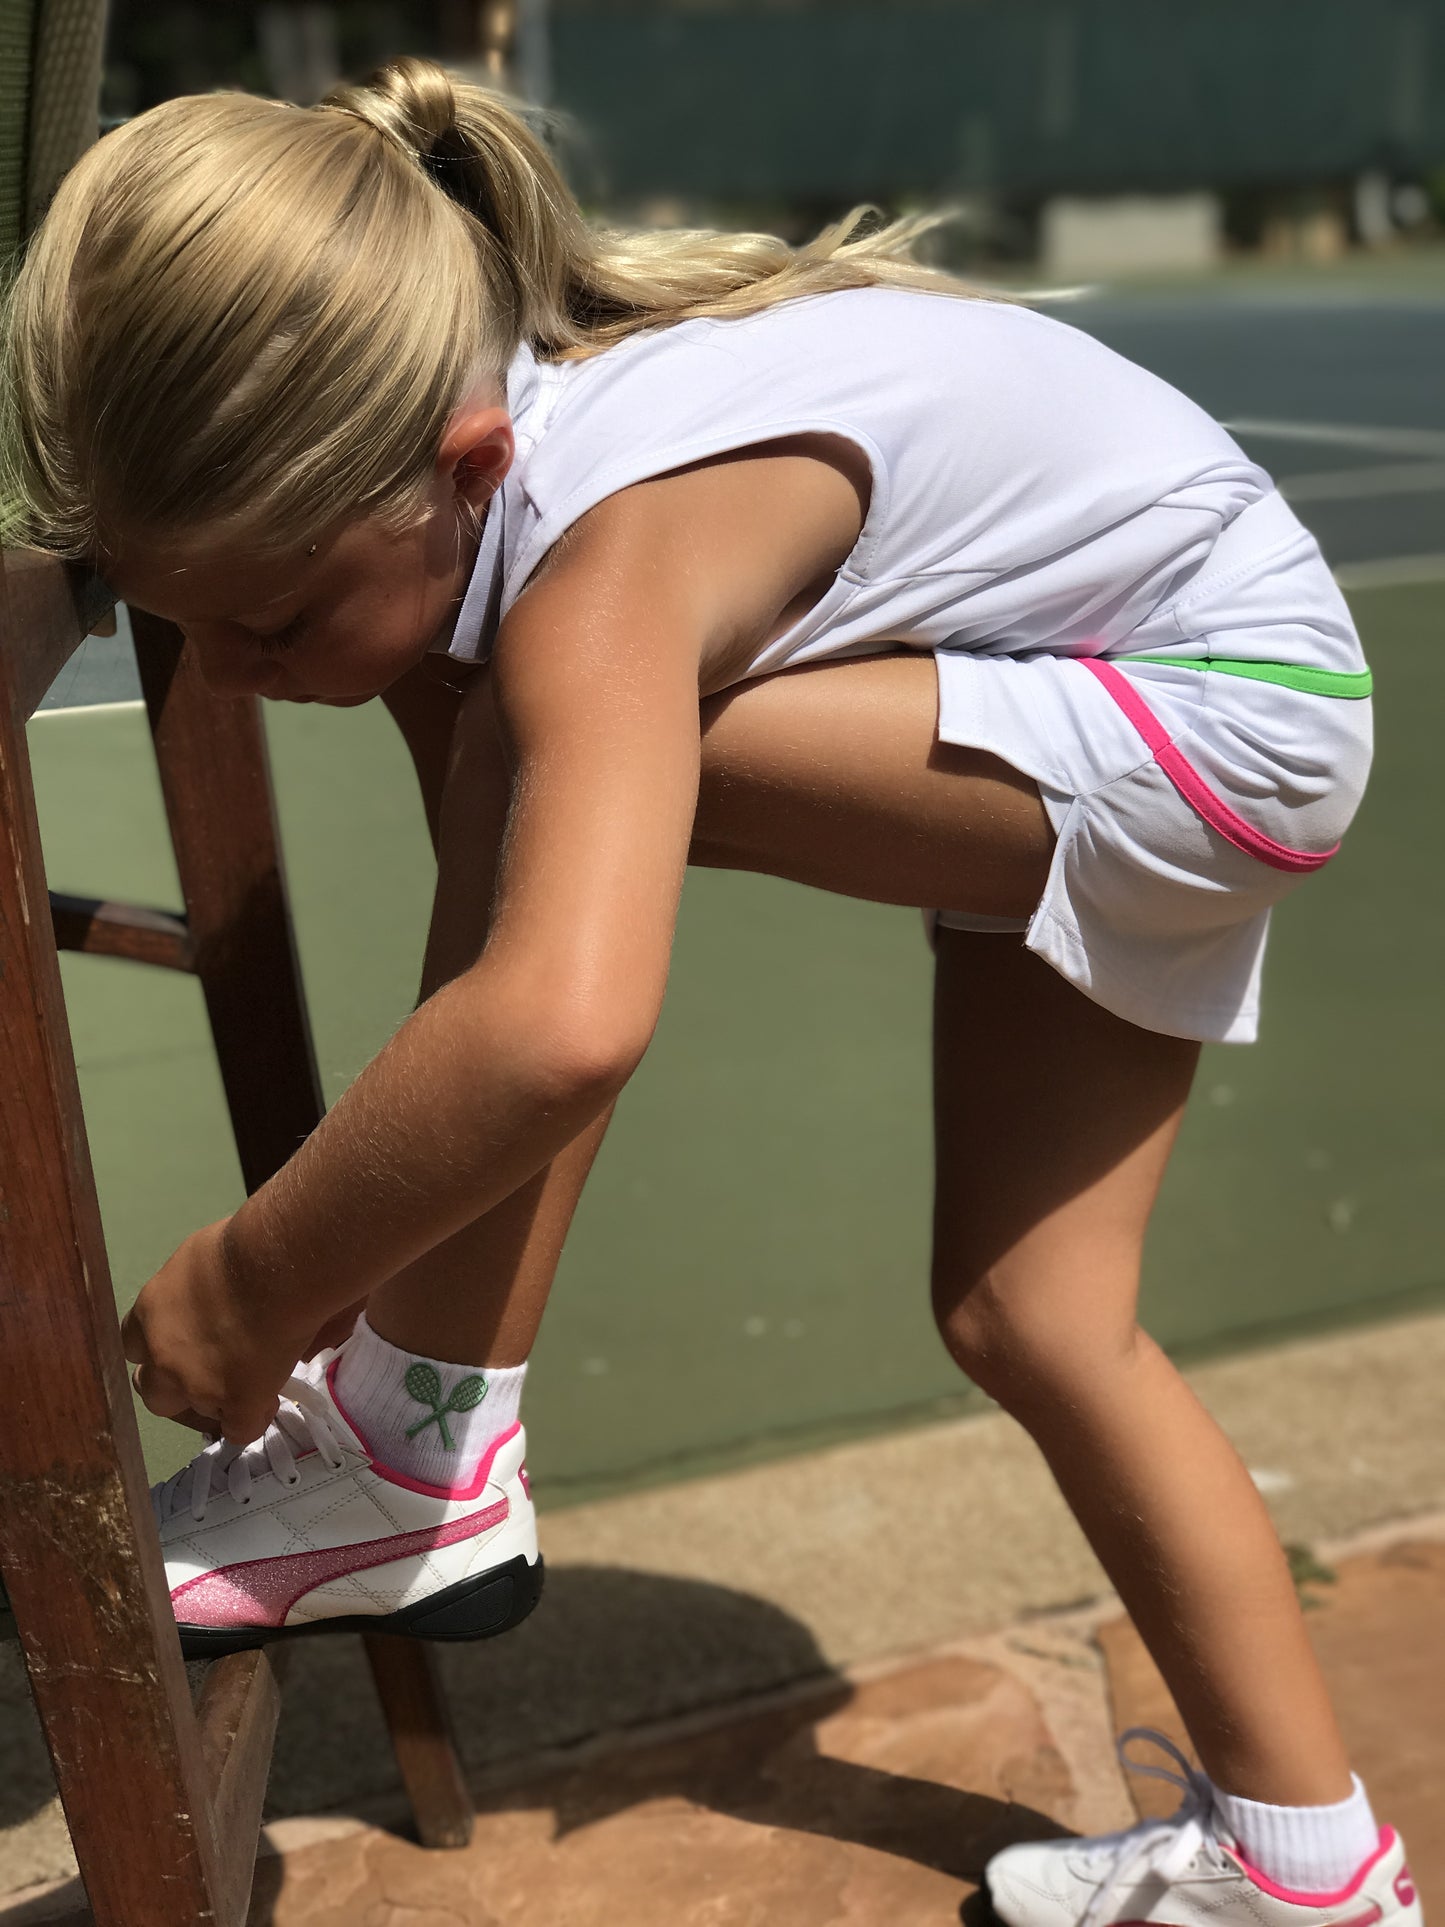 Meadow Lane Skirt White - Little Miss Tennis